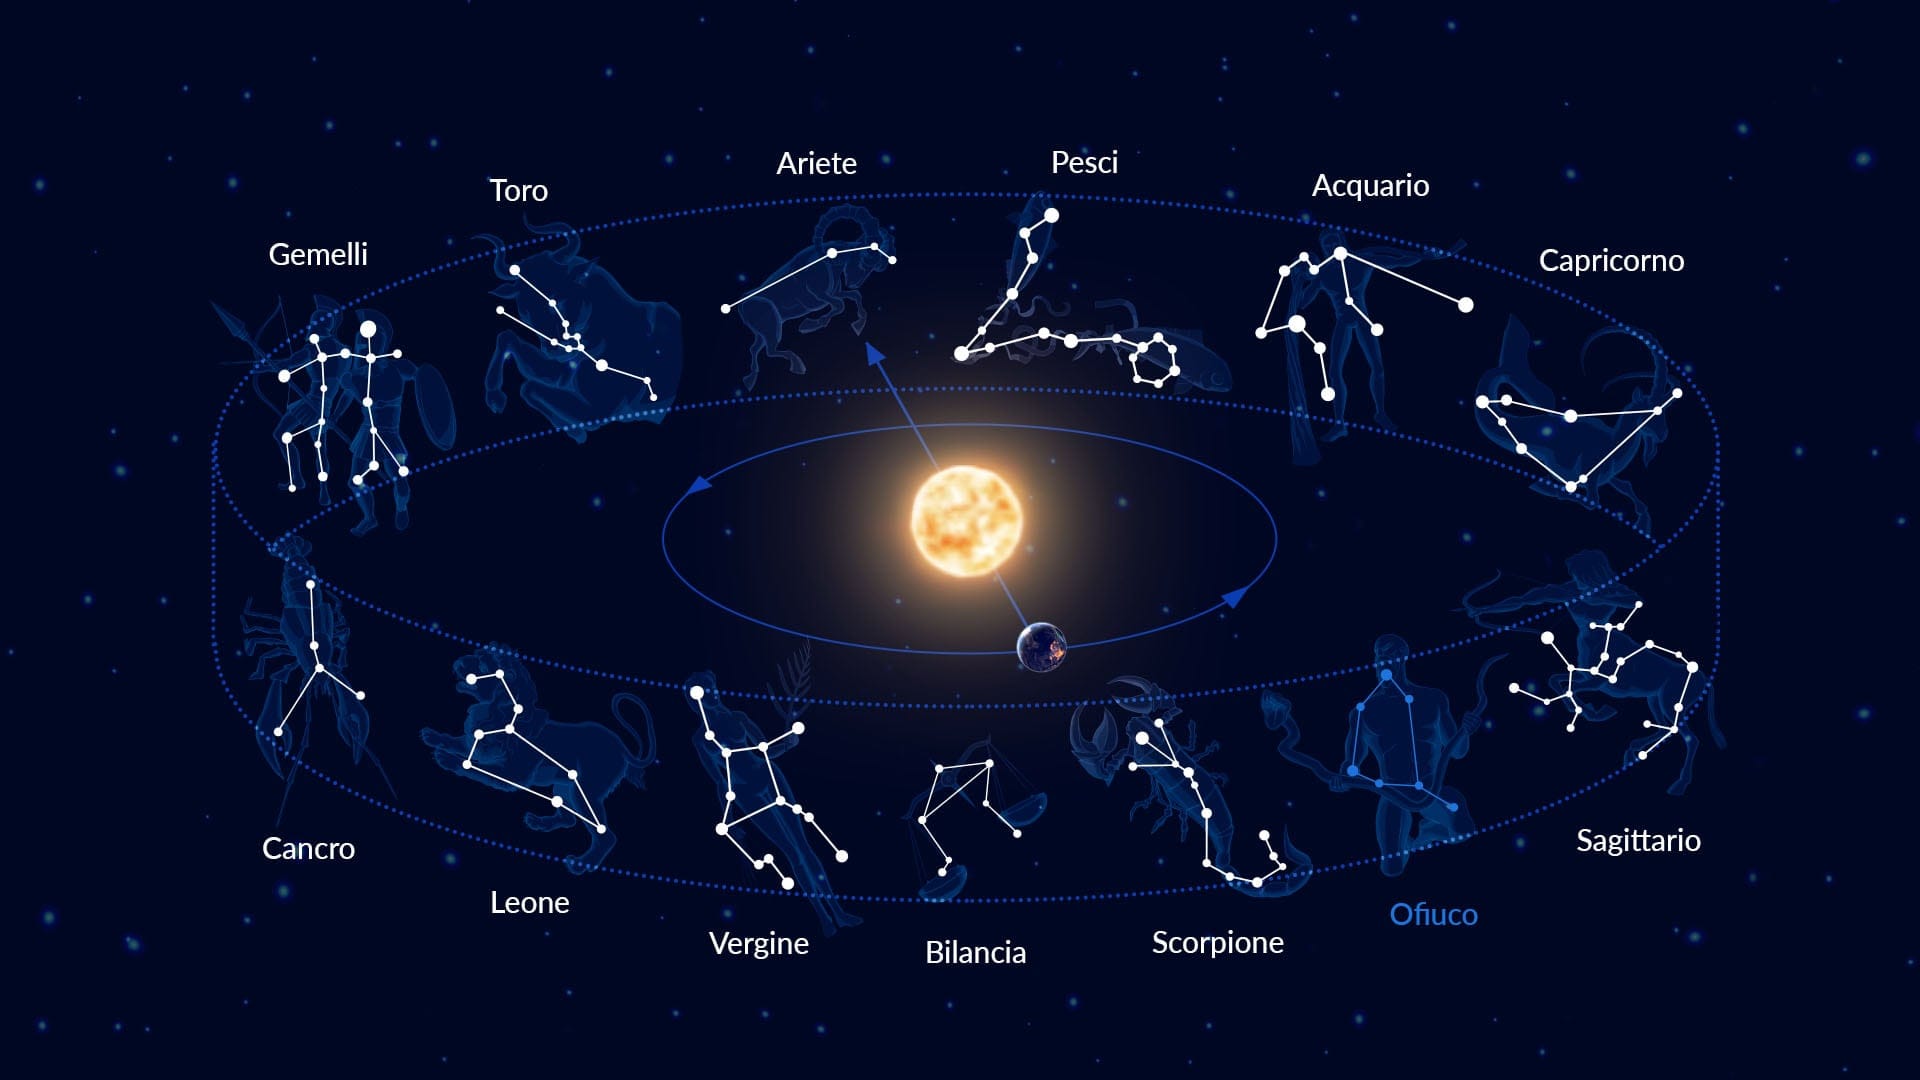 12 zodiac constellations